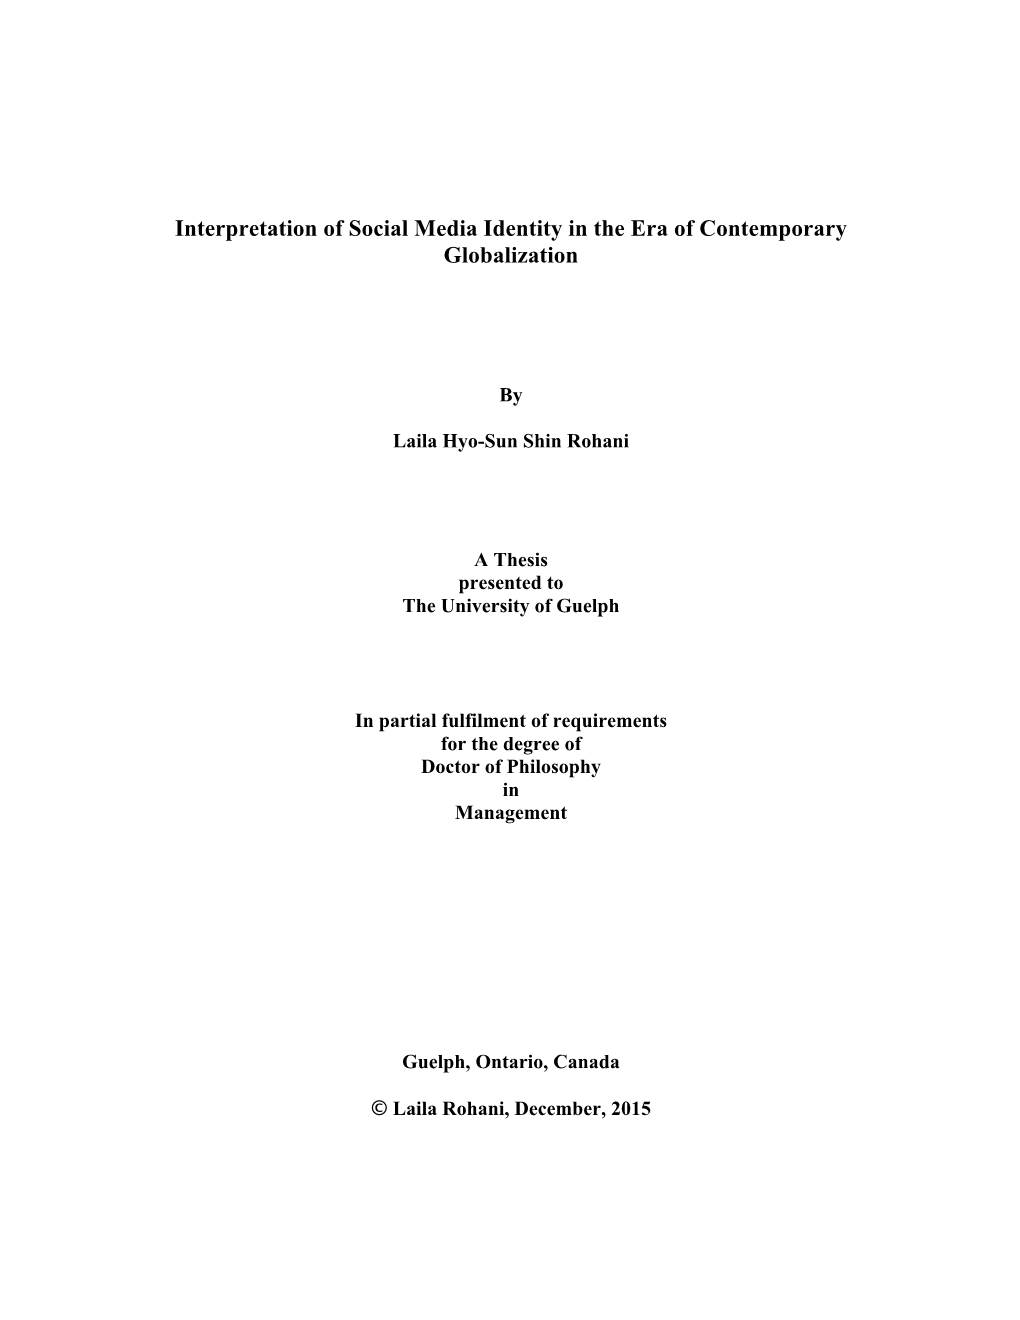 Interpretation of Social Media Identity in the Era of Contemporary Globalization